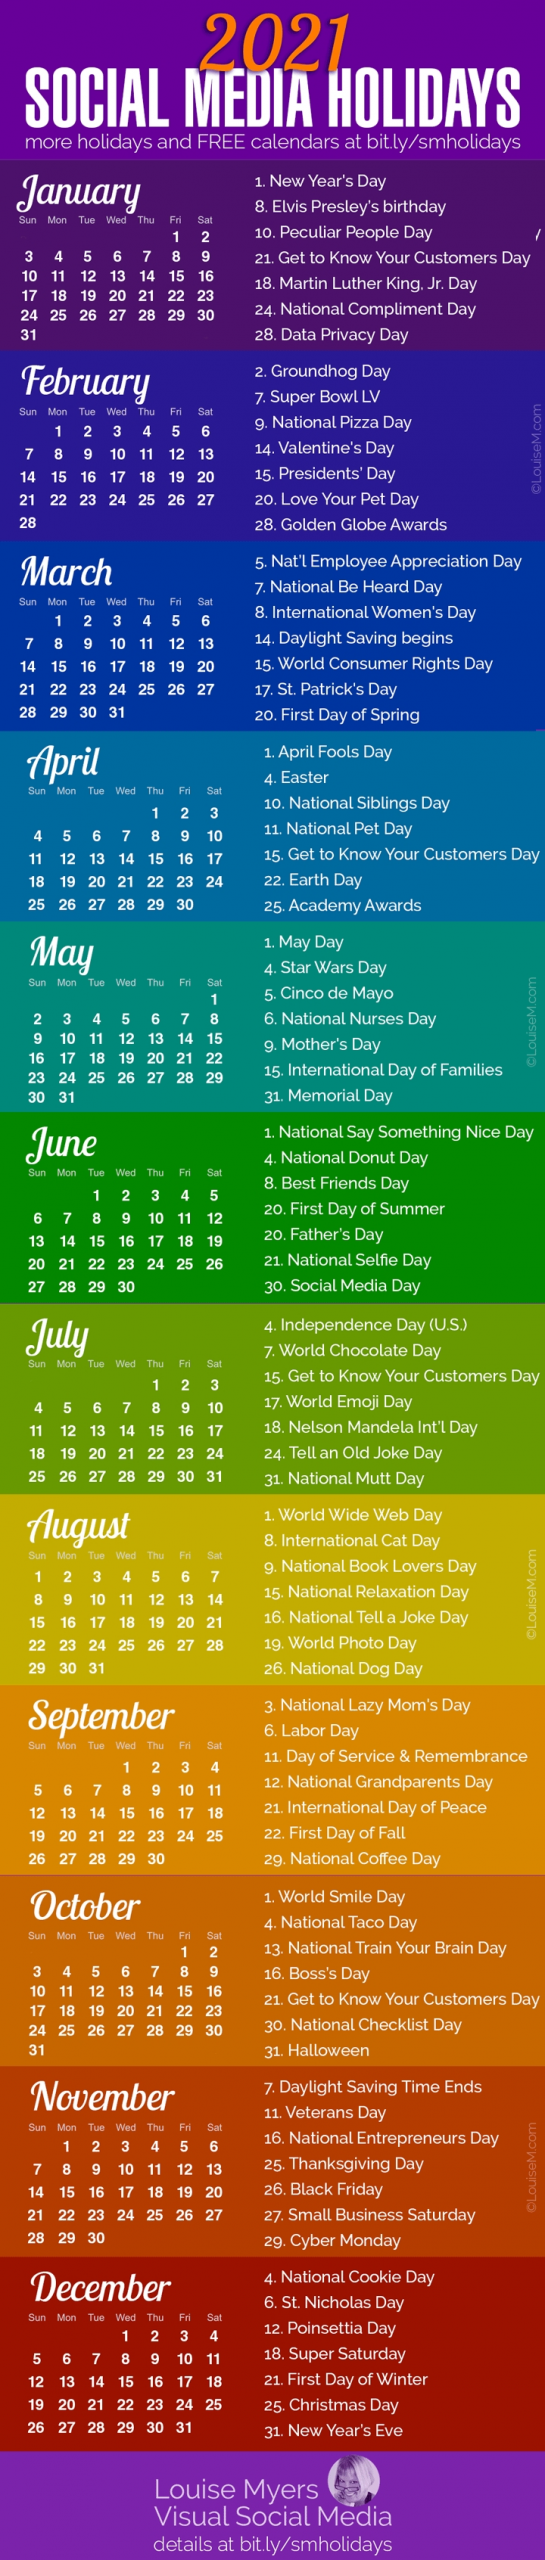 Get National Day Calendar 2021 Printable List